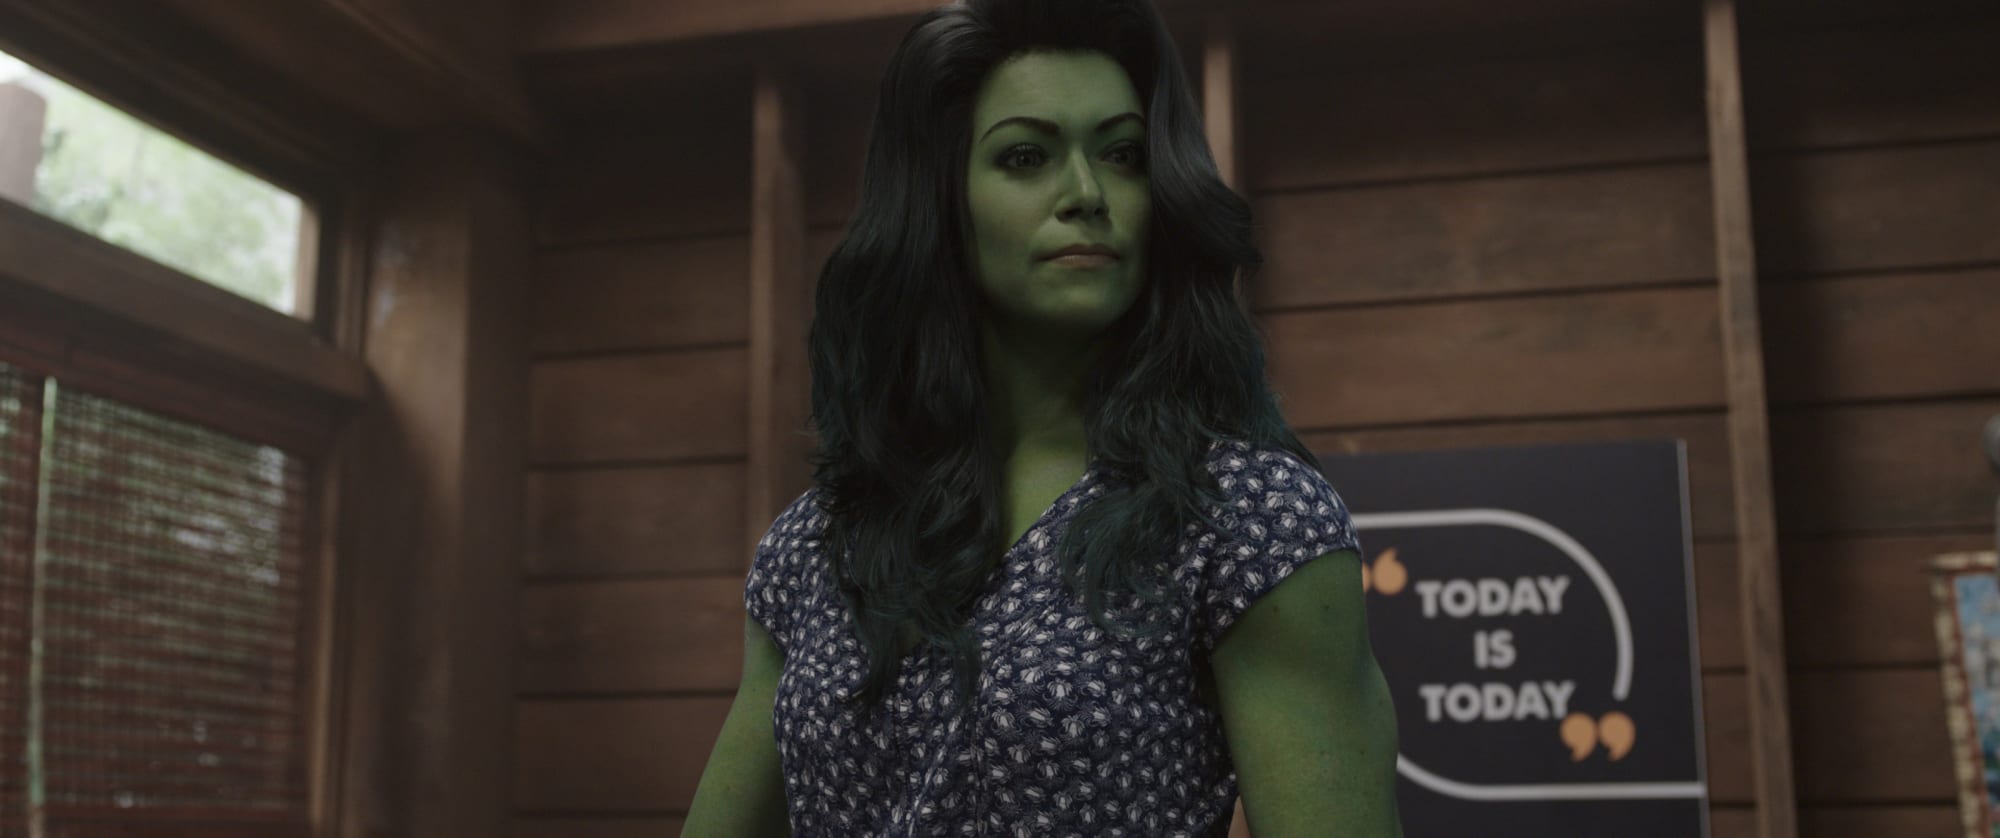 She-Hulk (S2:E12) - Project 88.7 Boise, Idaho